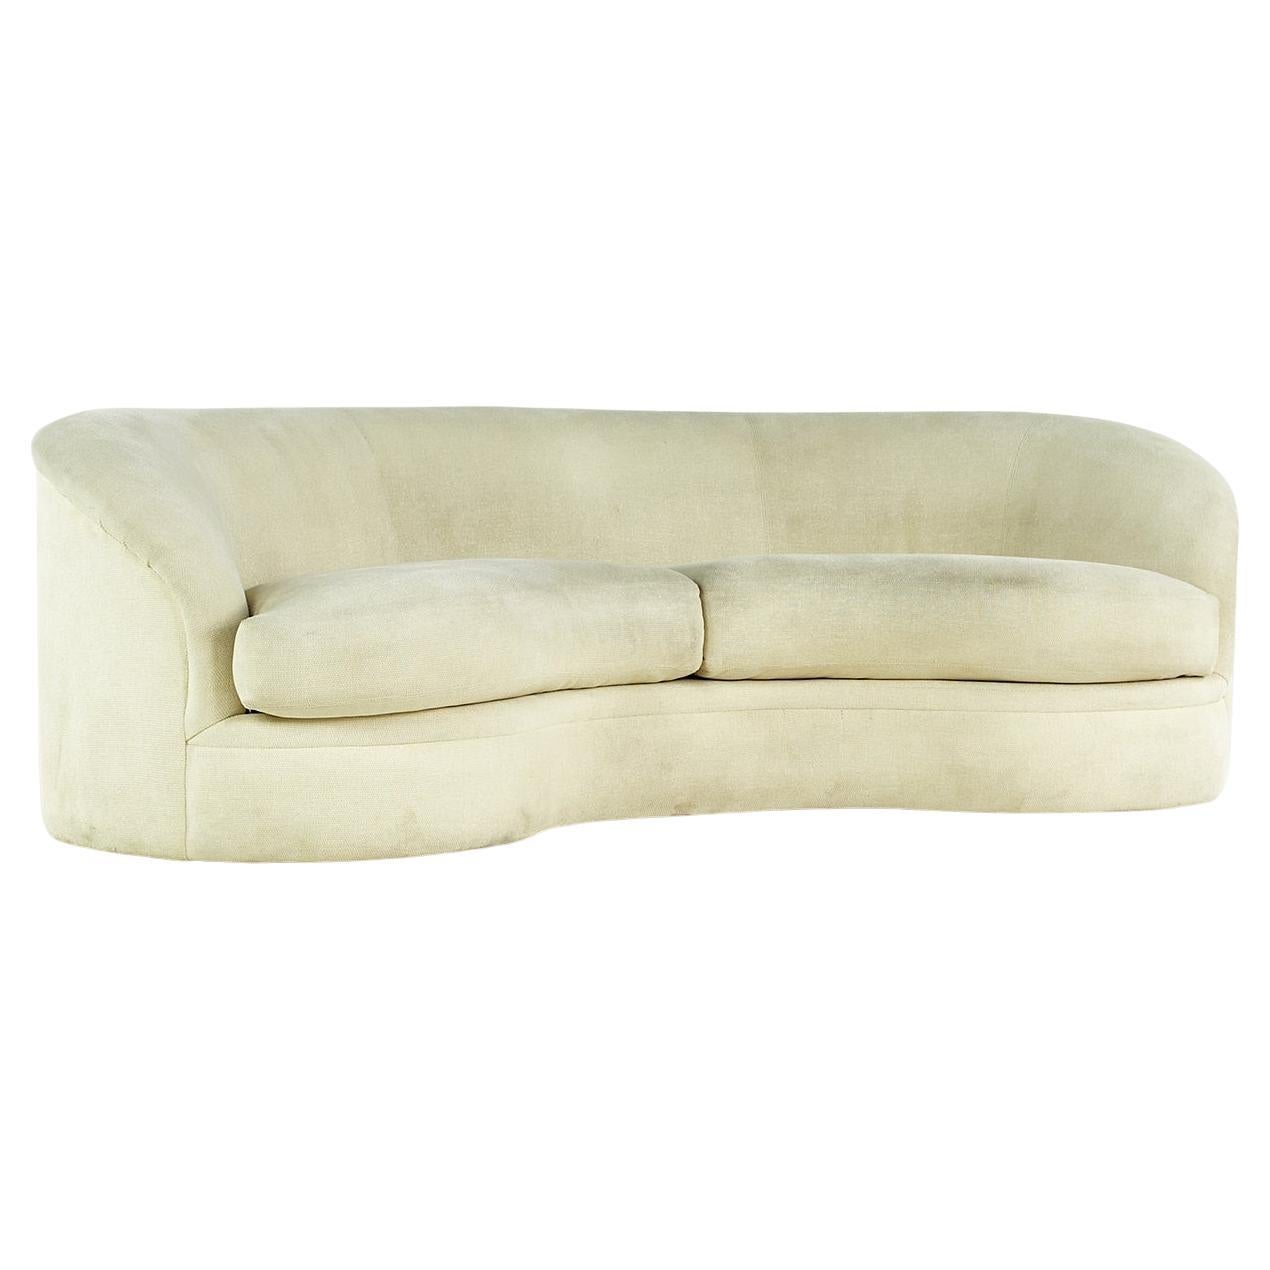 Kagan Style Directional Furniture Midcentury Biomorphic Kidney Sofa